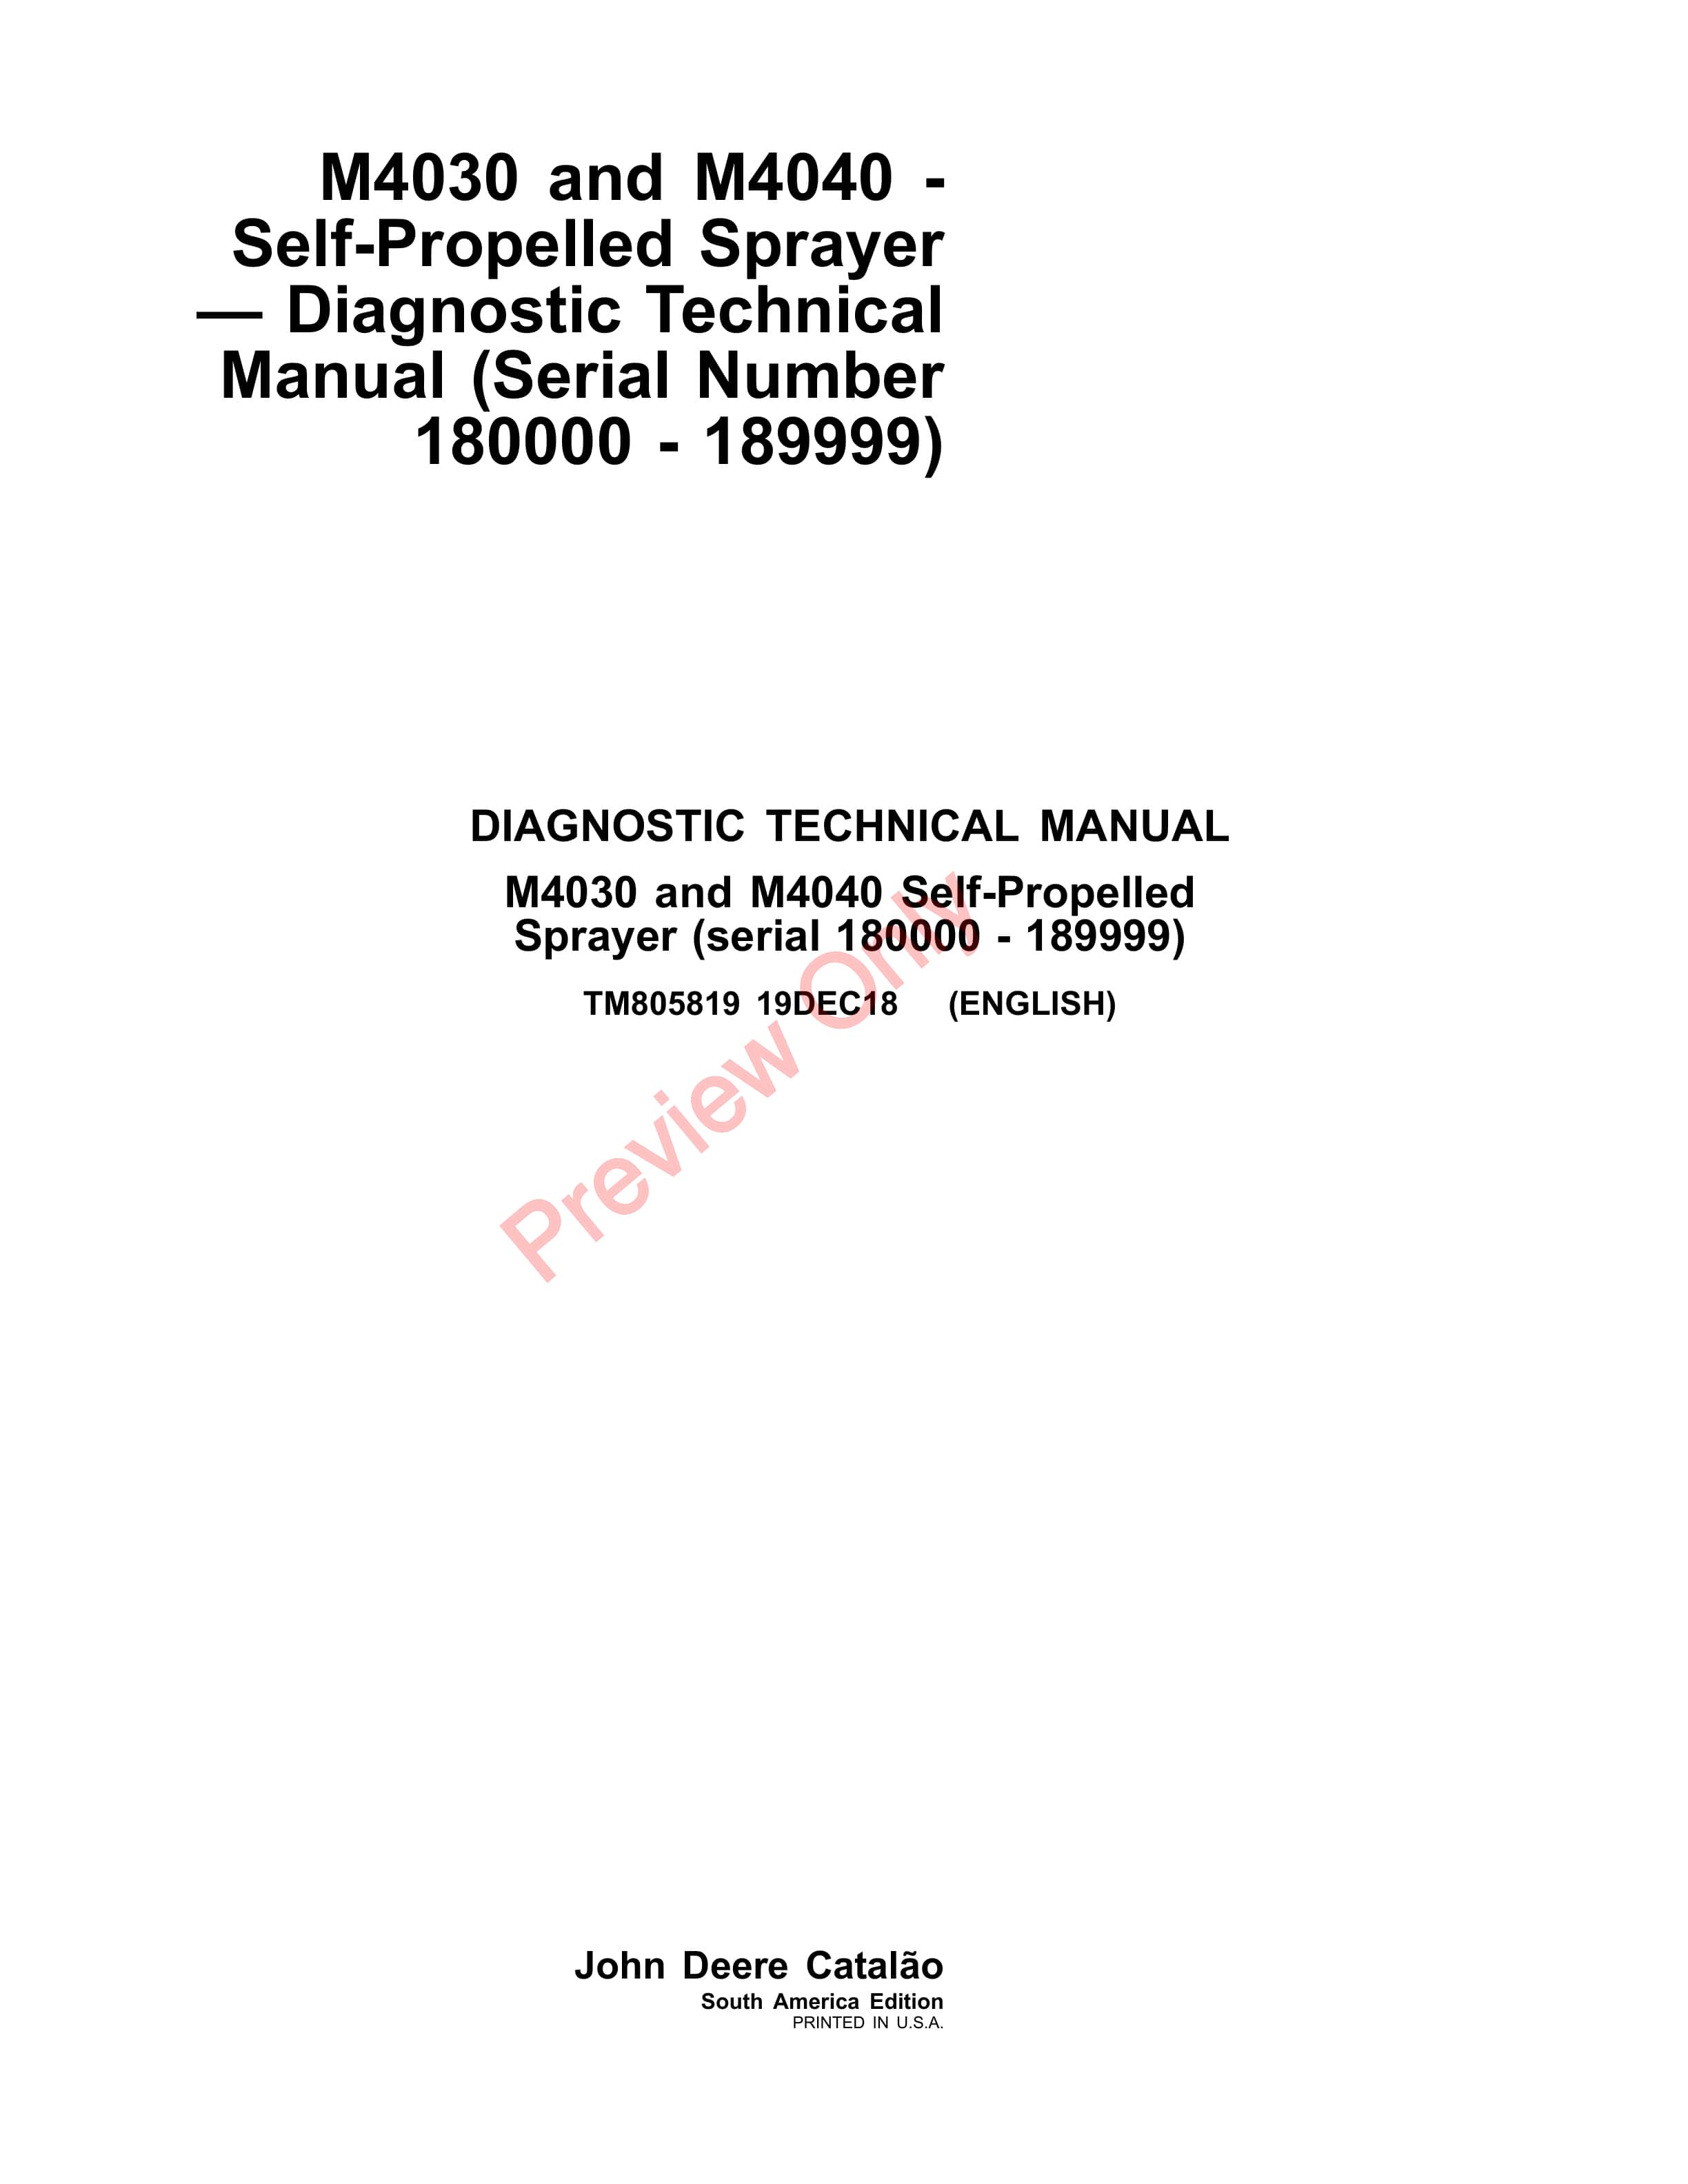 John Deere M4030 and M4040 Self Propelled Sprayes Diagnostic Technical Manual TM805819 19DEC18 1